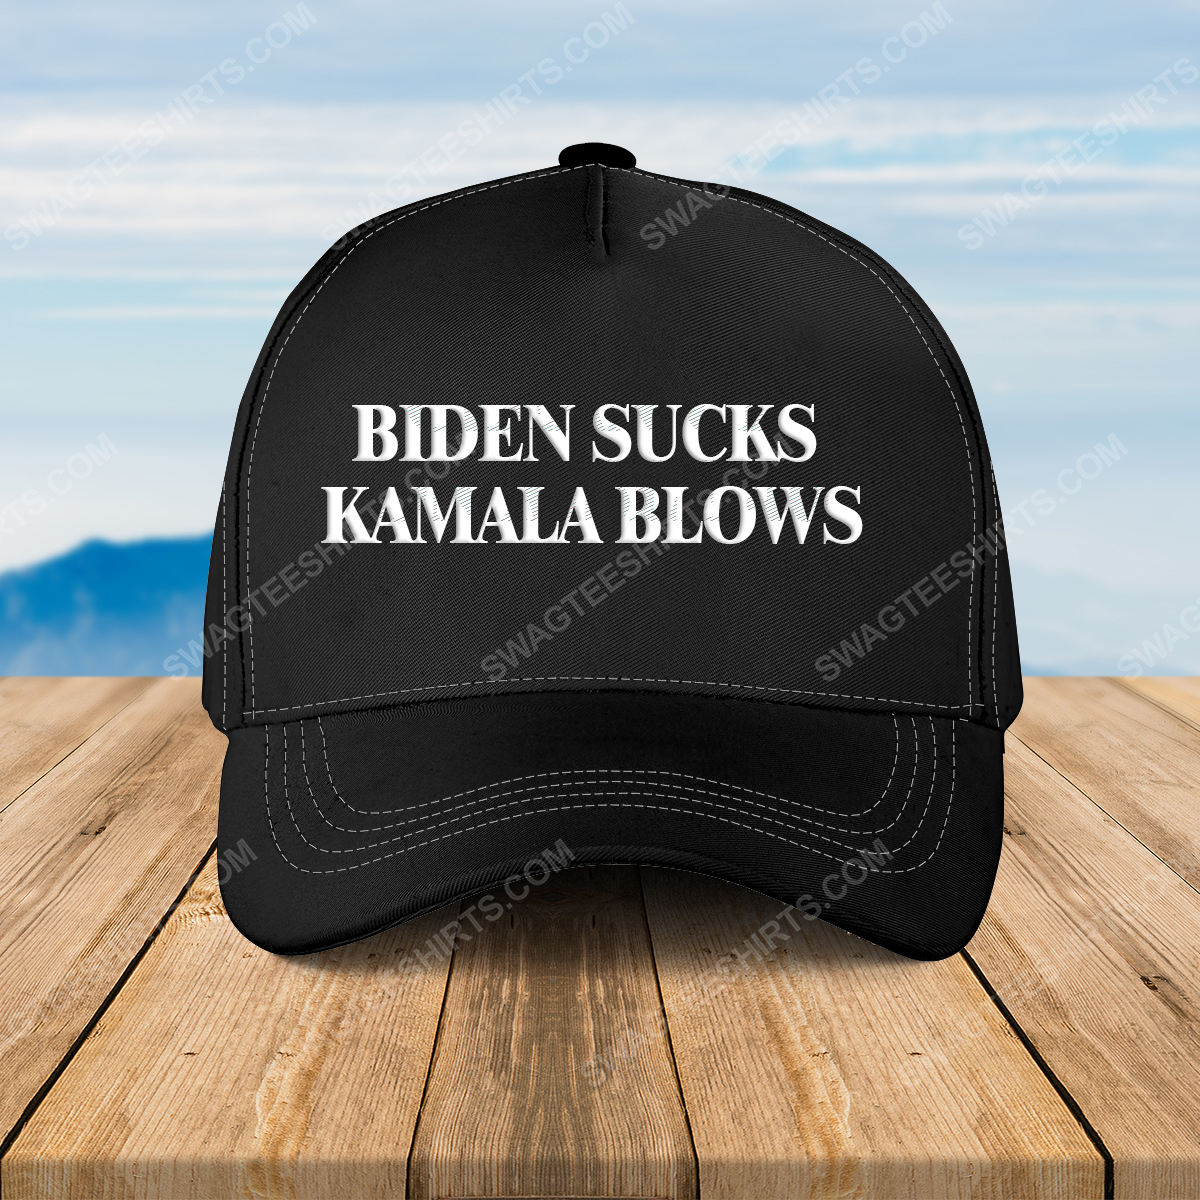 Biden sucks kamala blows full print classic hat 1 - Copy (3)